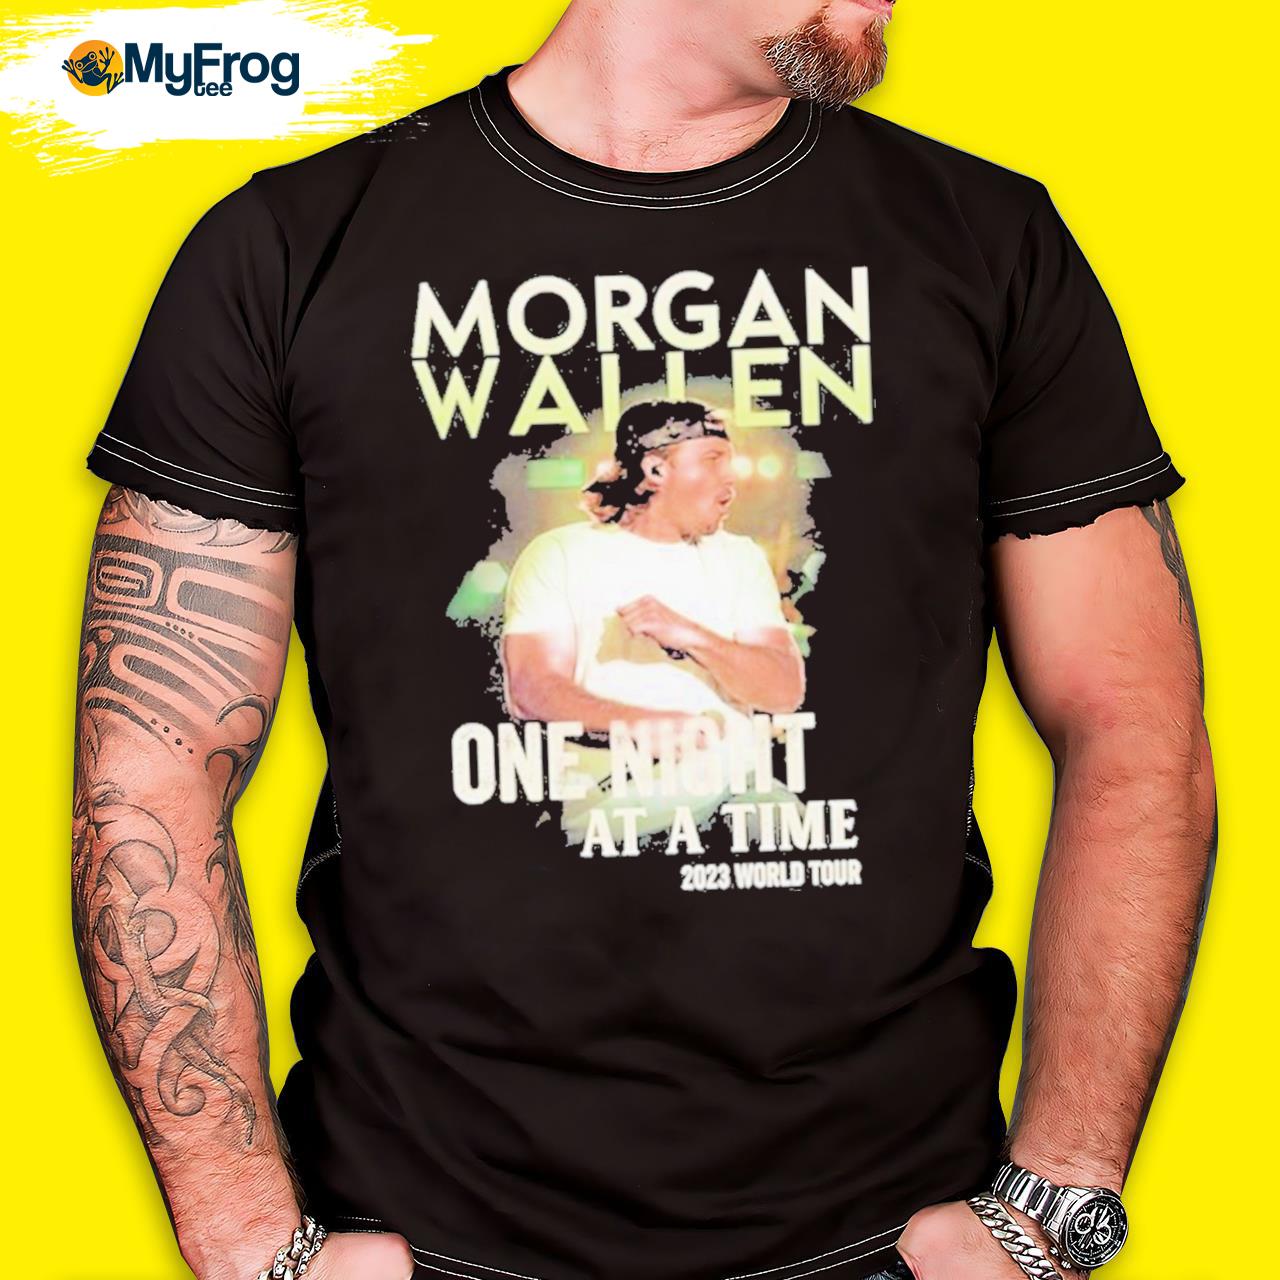 Morgan wallen one night at a time tour 2022 shirt